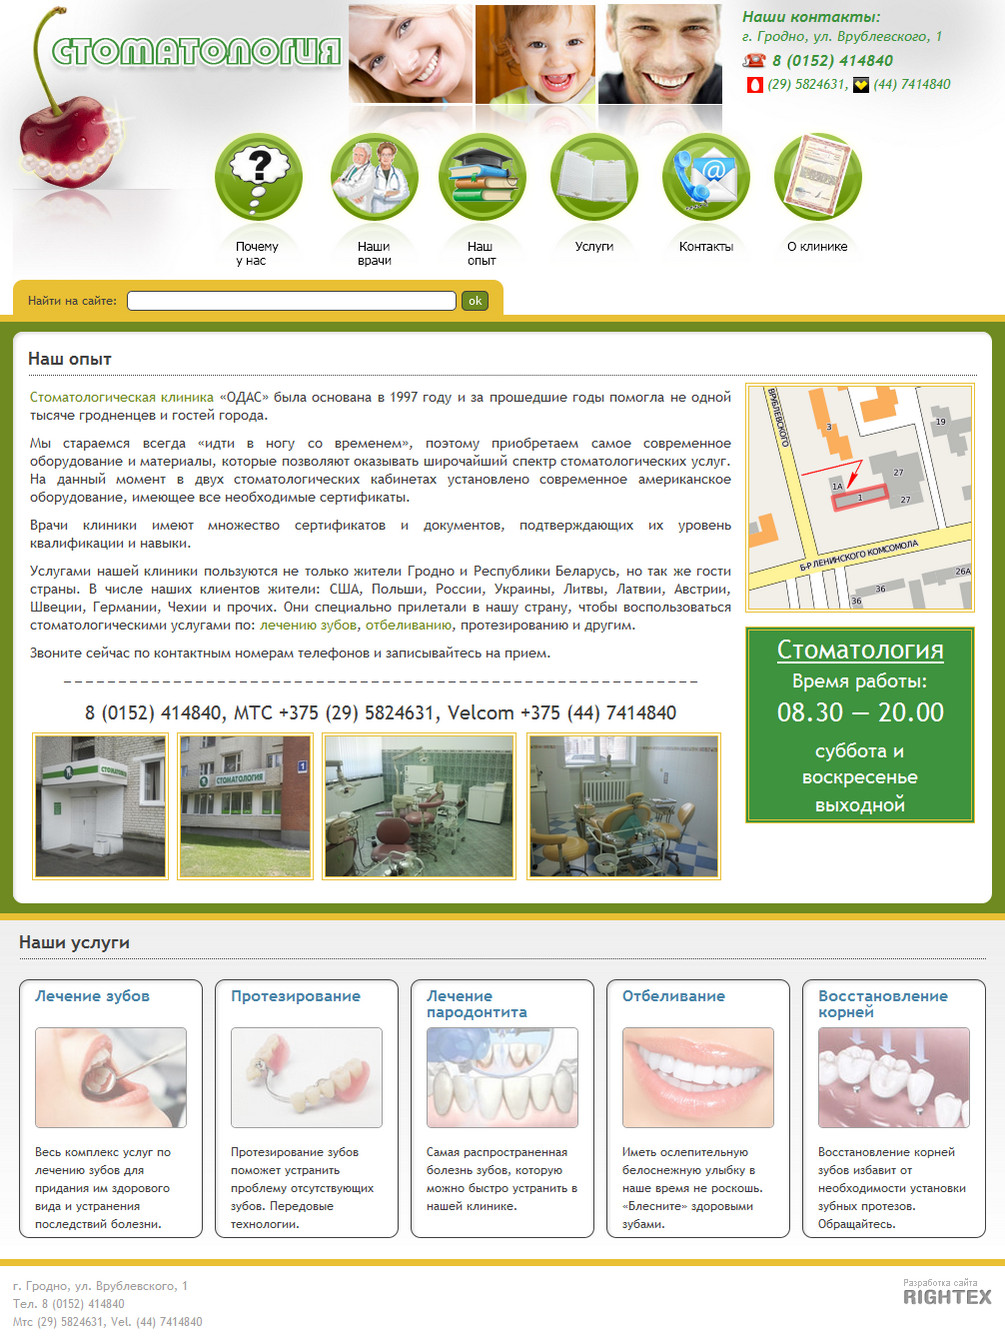 Стоматологическая клиника (http://stomatologist.by/)